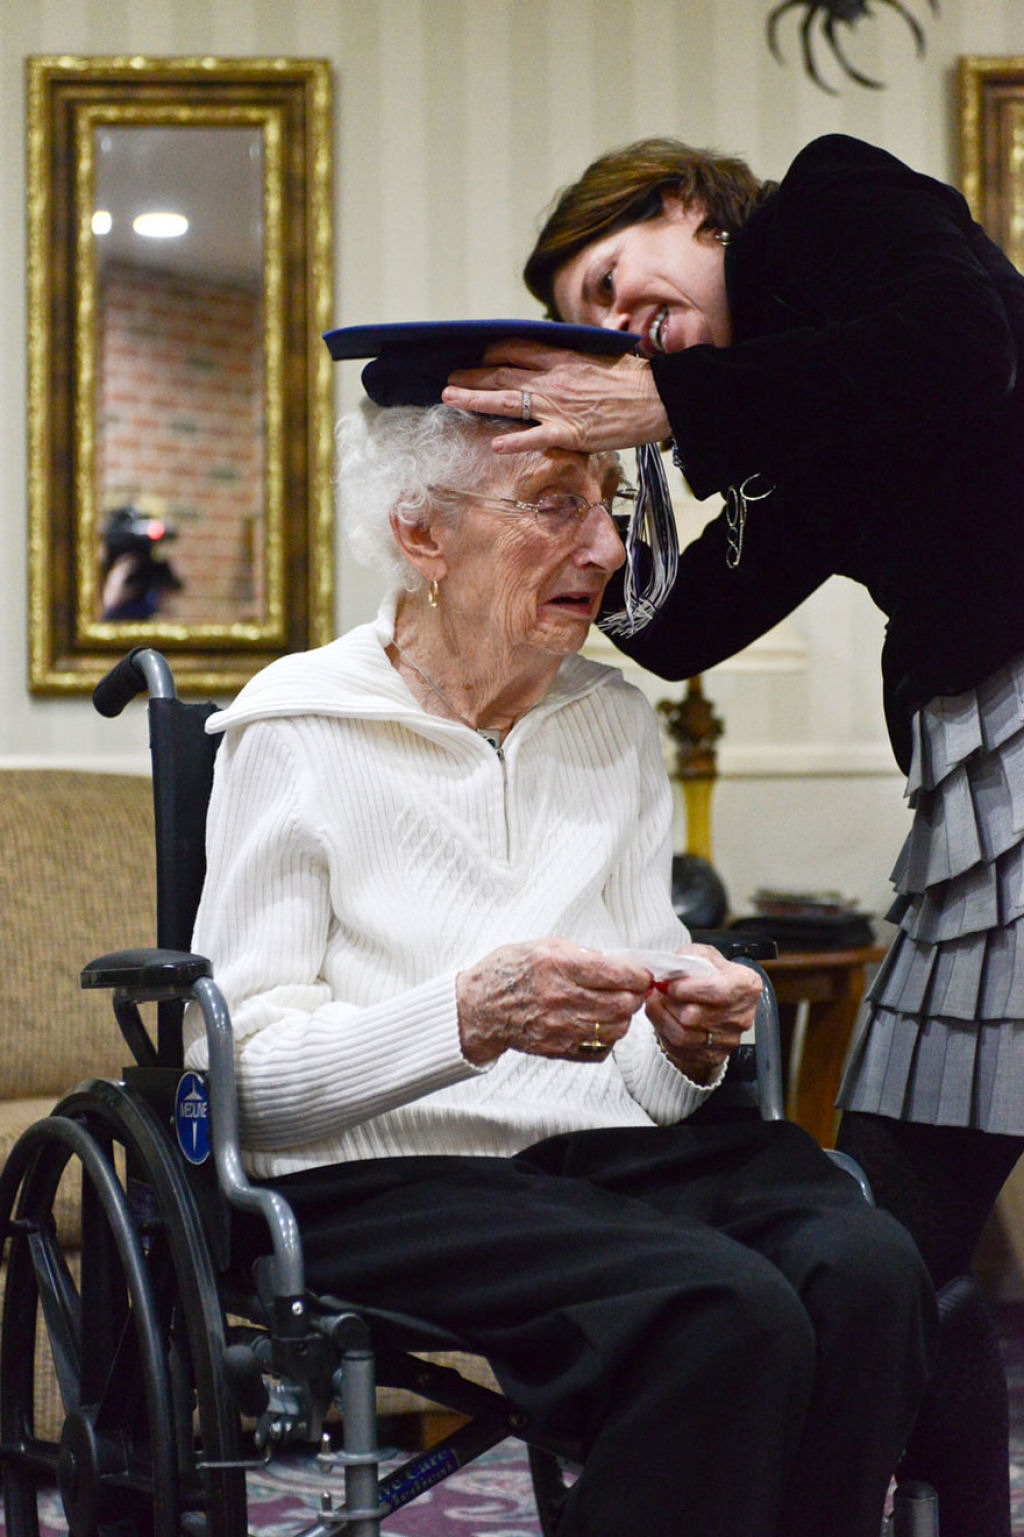 Esta idosa de 97 anos chora de alegria depois de conseguir ao fim seu diploma 02